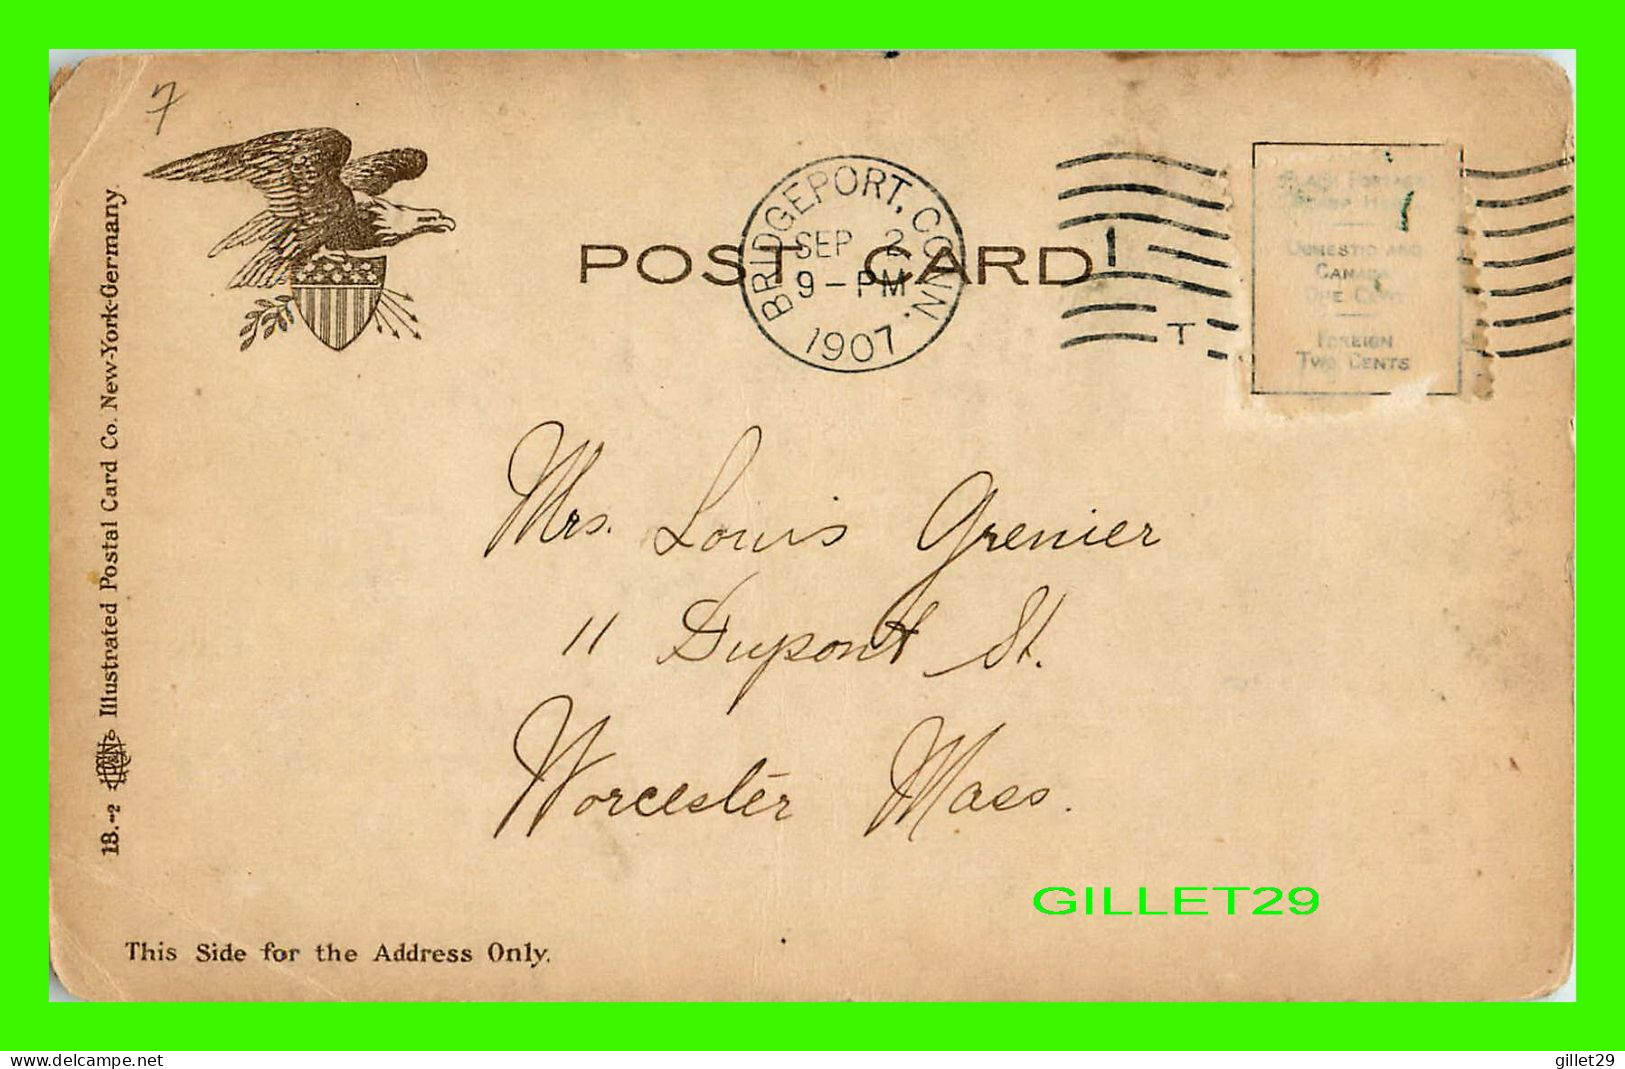 BRIDGEPORT, CT - FAIRFIELD COUNTY COURT HOUSE - TRAVEL IN 1907 - ILLUSTRATED POSTAL CARD CO - - Bridgeport